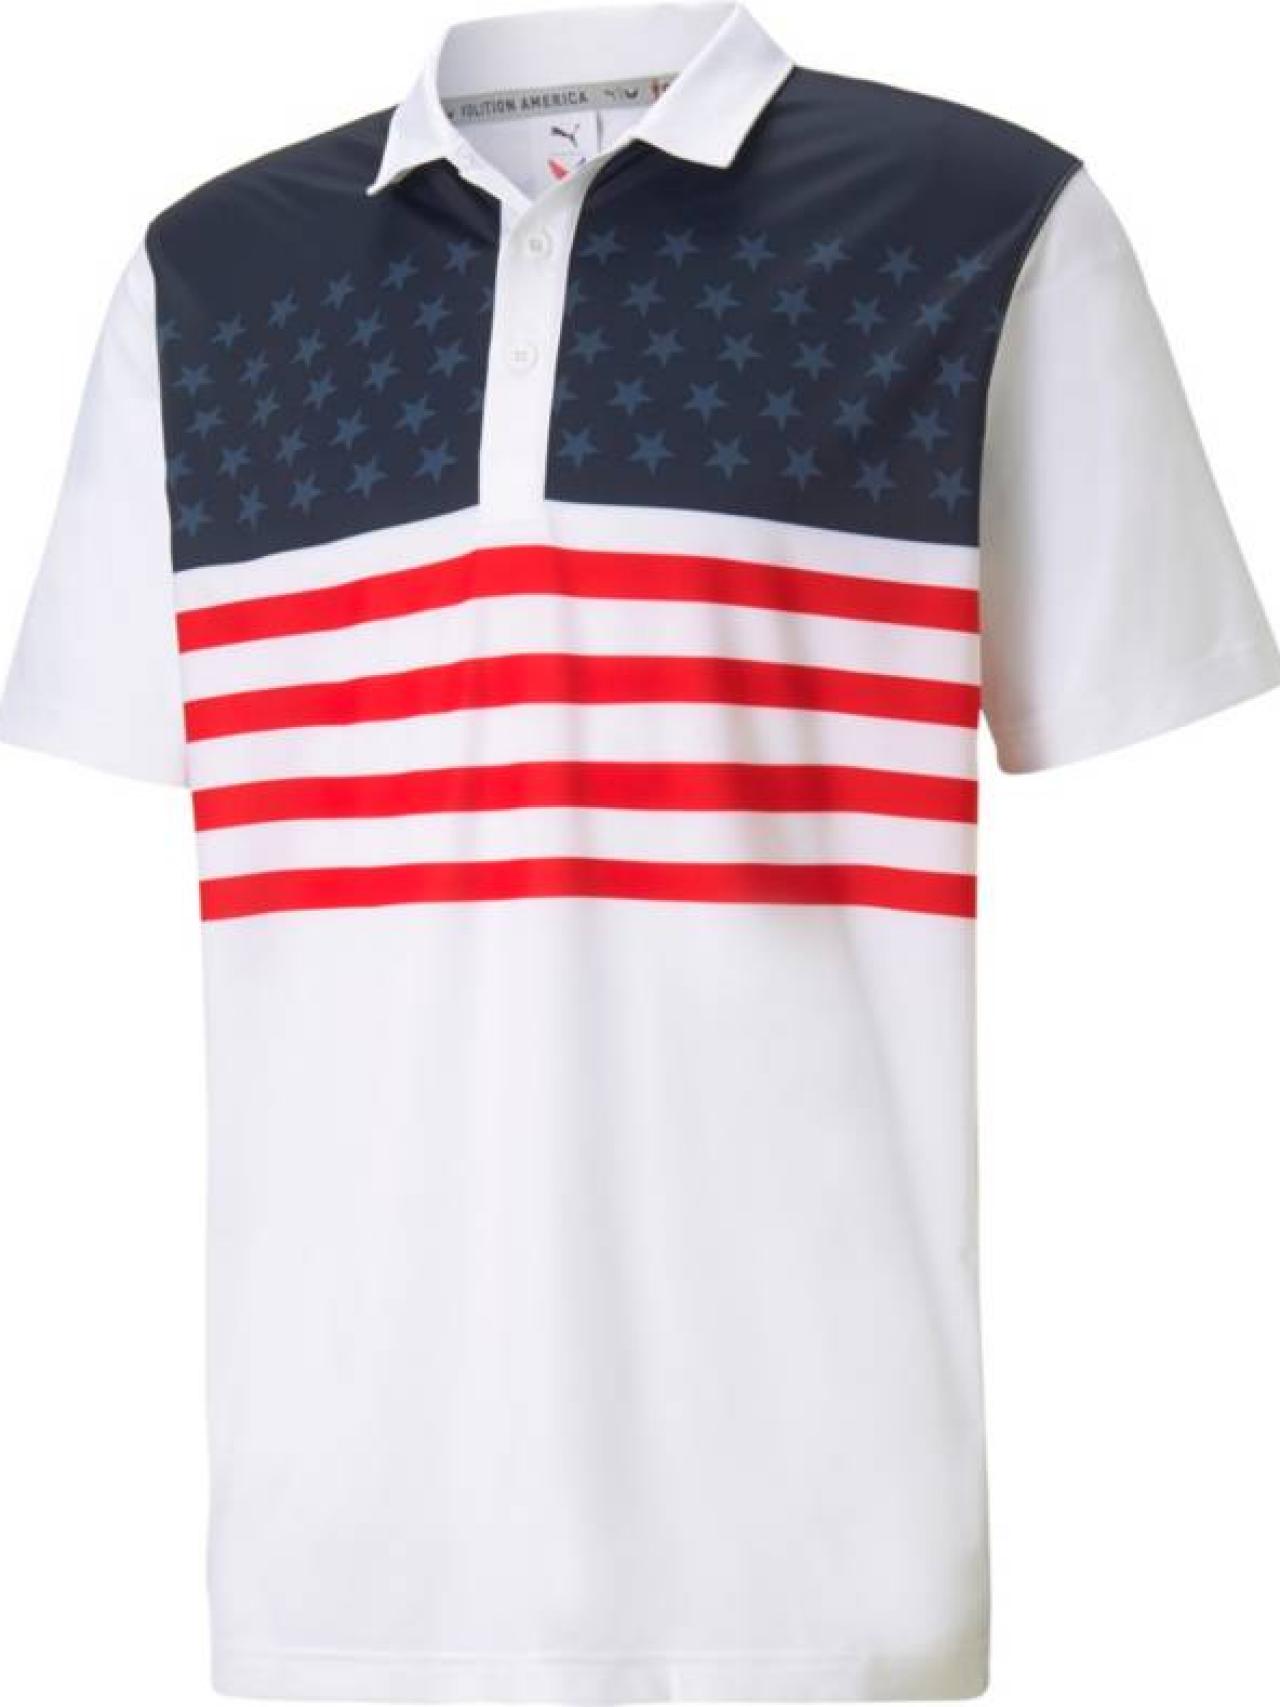 Patriotic Golf Gear: Our favorite USA 